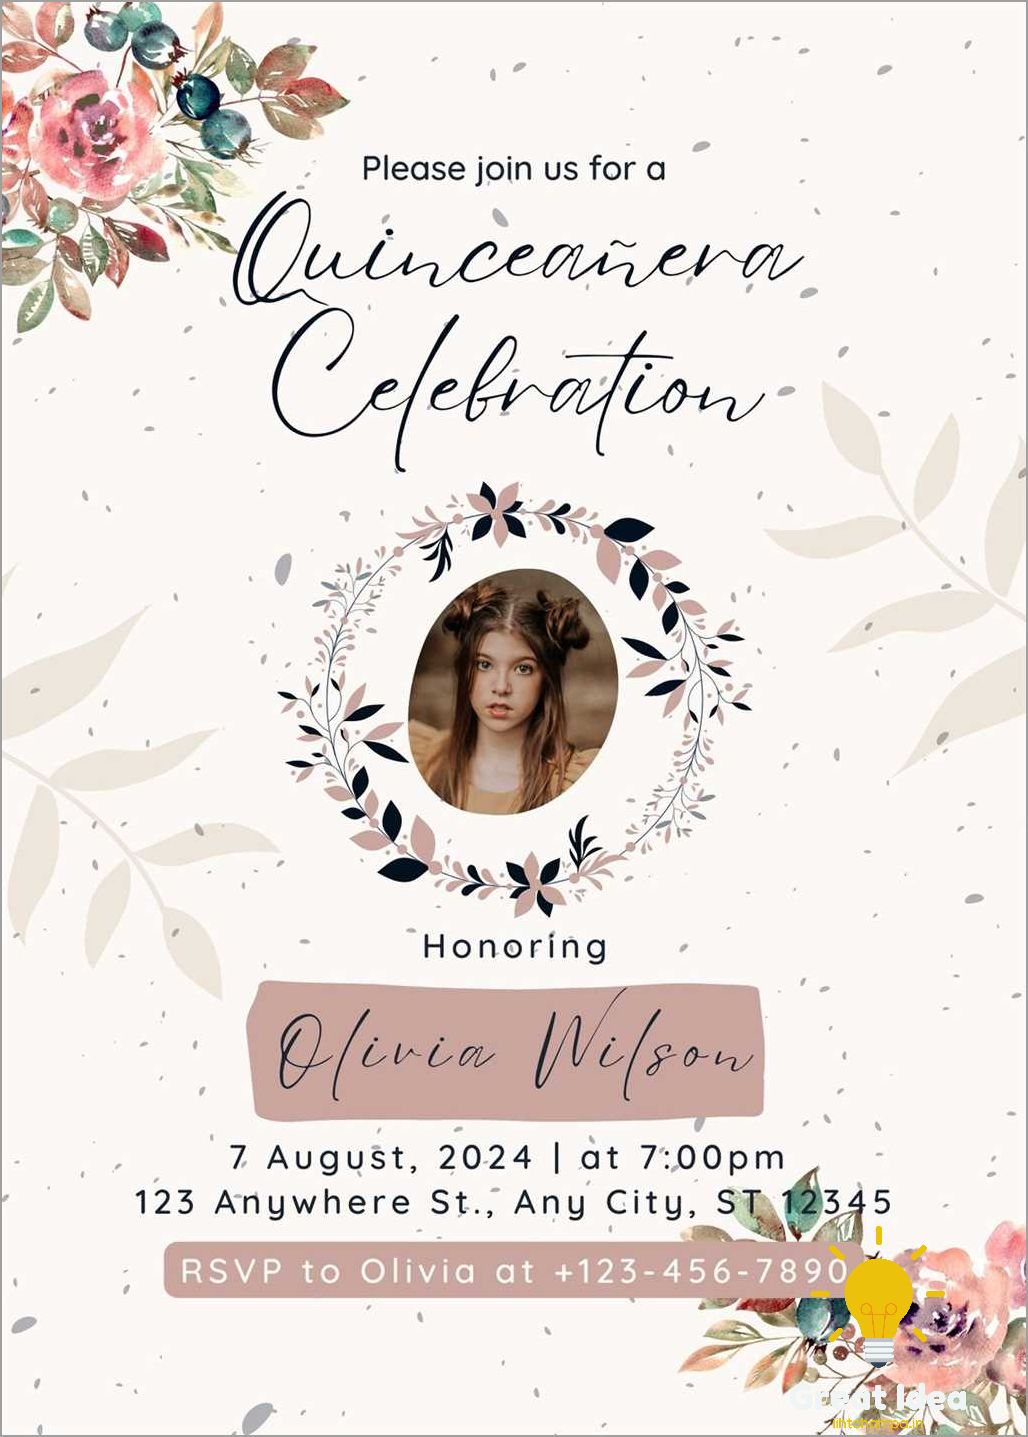 Unique and Creative Invitation Ideas for Quinceanera Celebrations